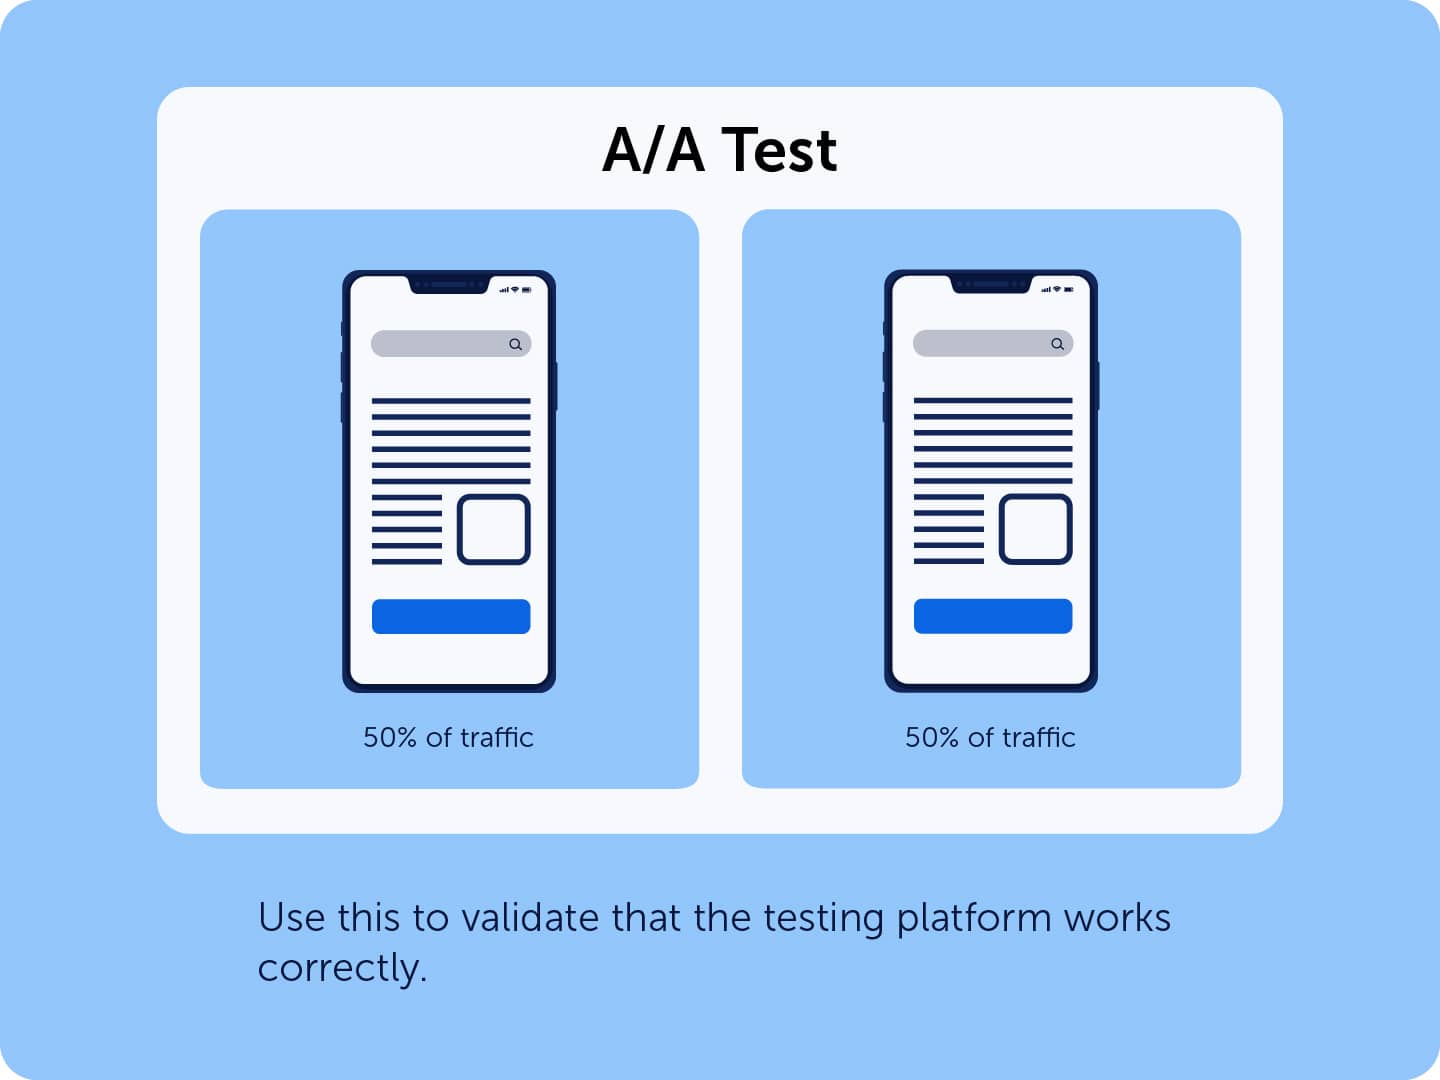 A/A test explanation